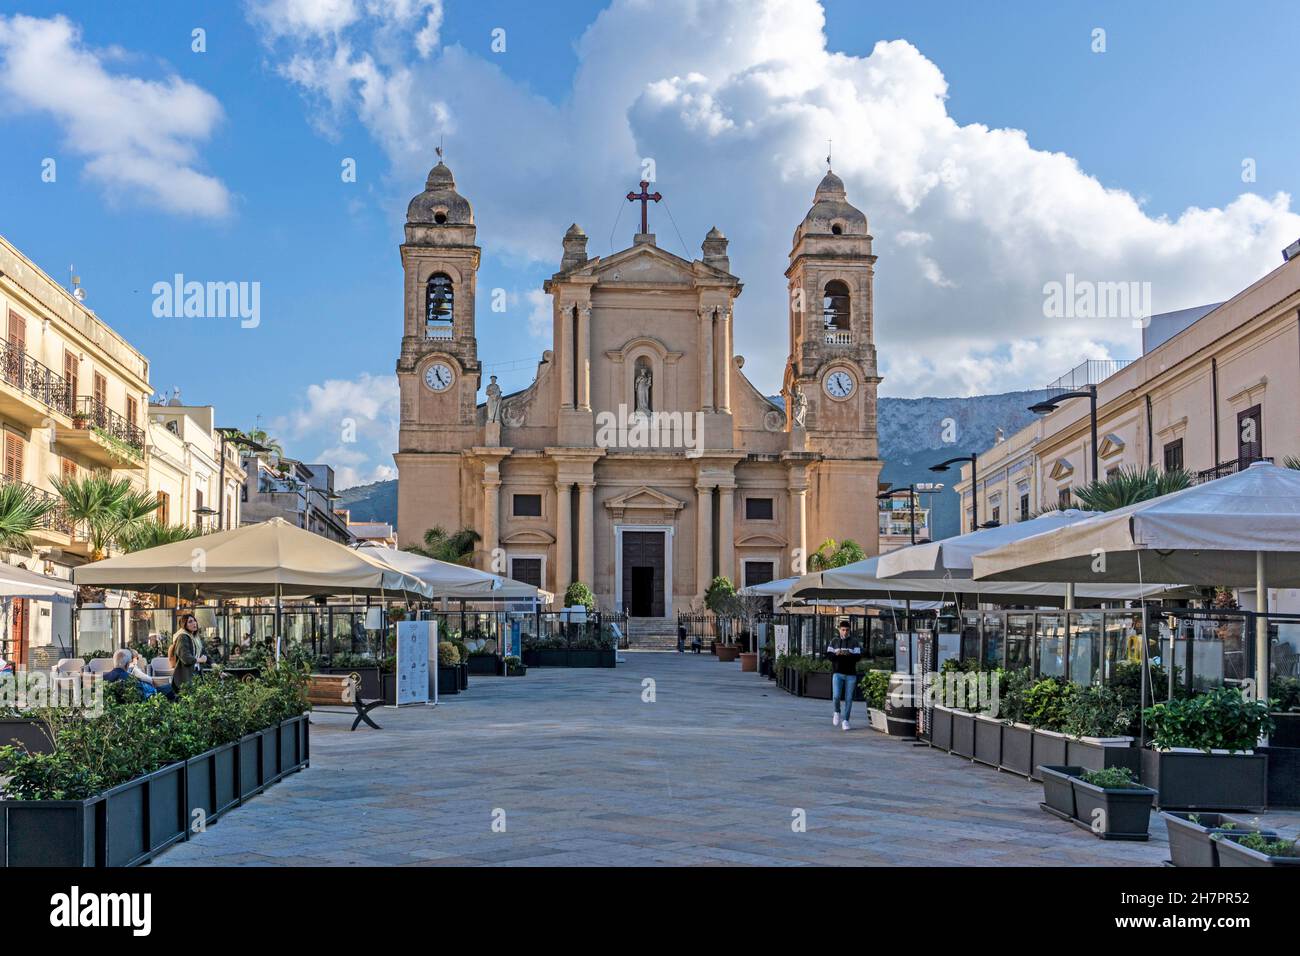 Piazza Duomo in Terrasini, Sicily, Italy. The central square in the town leading to the church of Saint Maria Santissima delle Grazie. Stock Photo